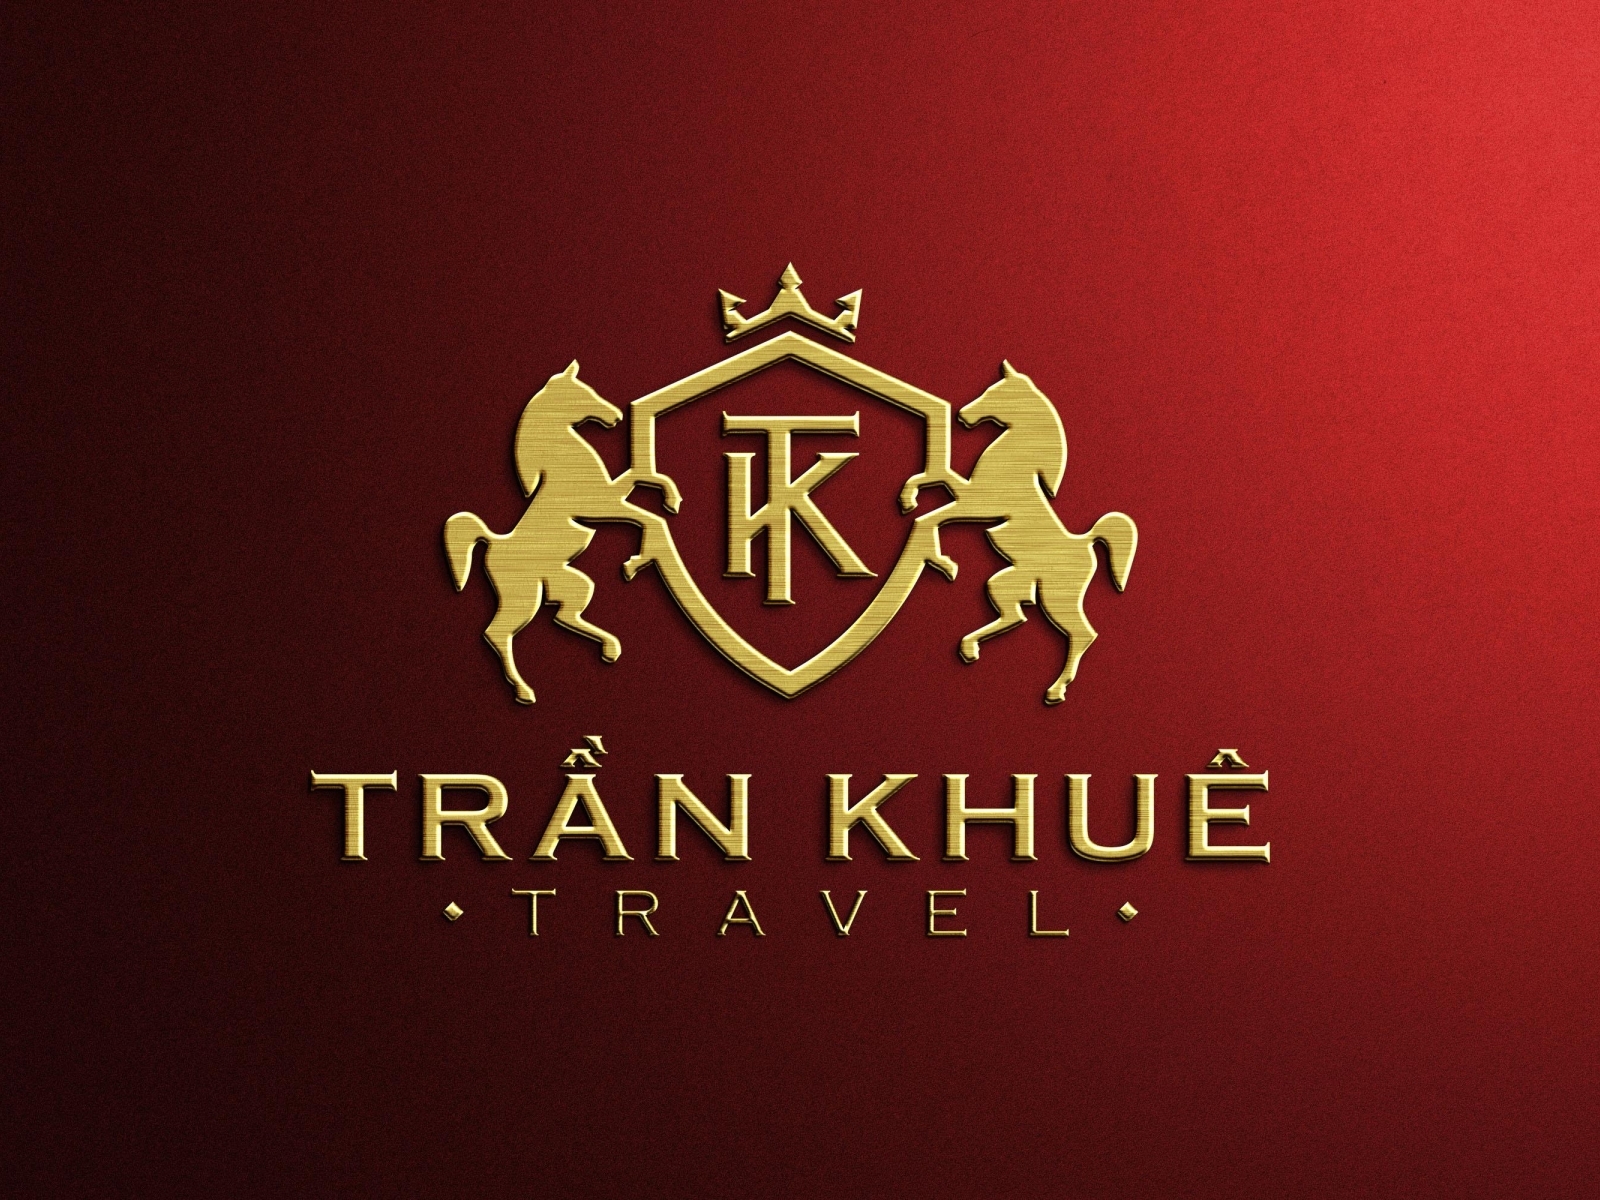 Trần Khuê Travel logo by Brandall Design by Brandall Design Agency on ...